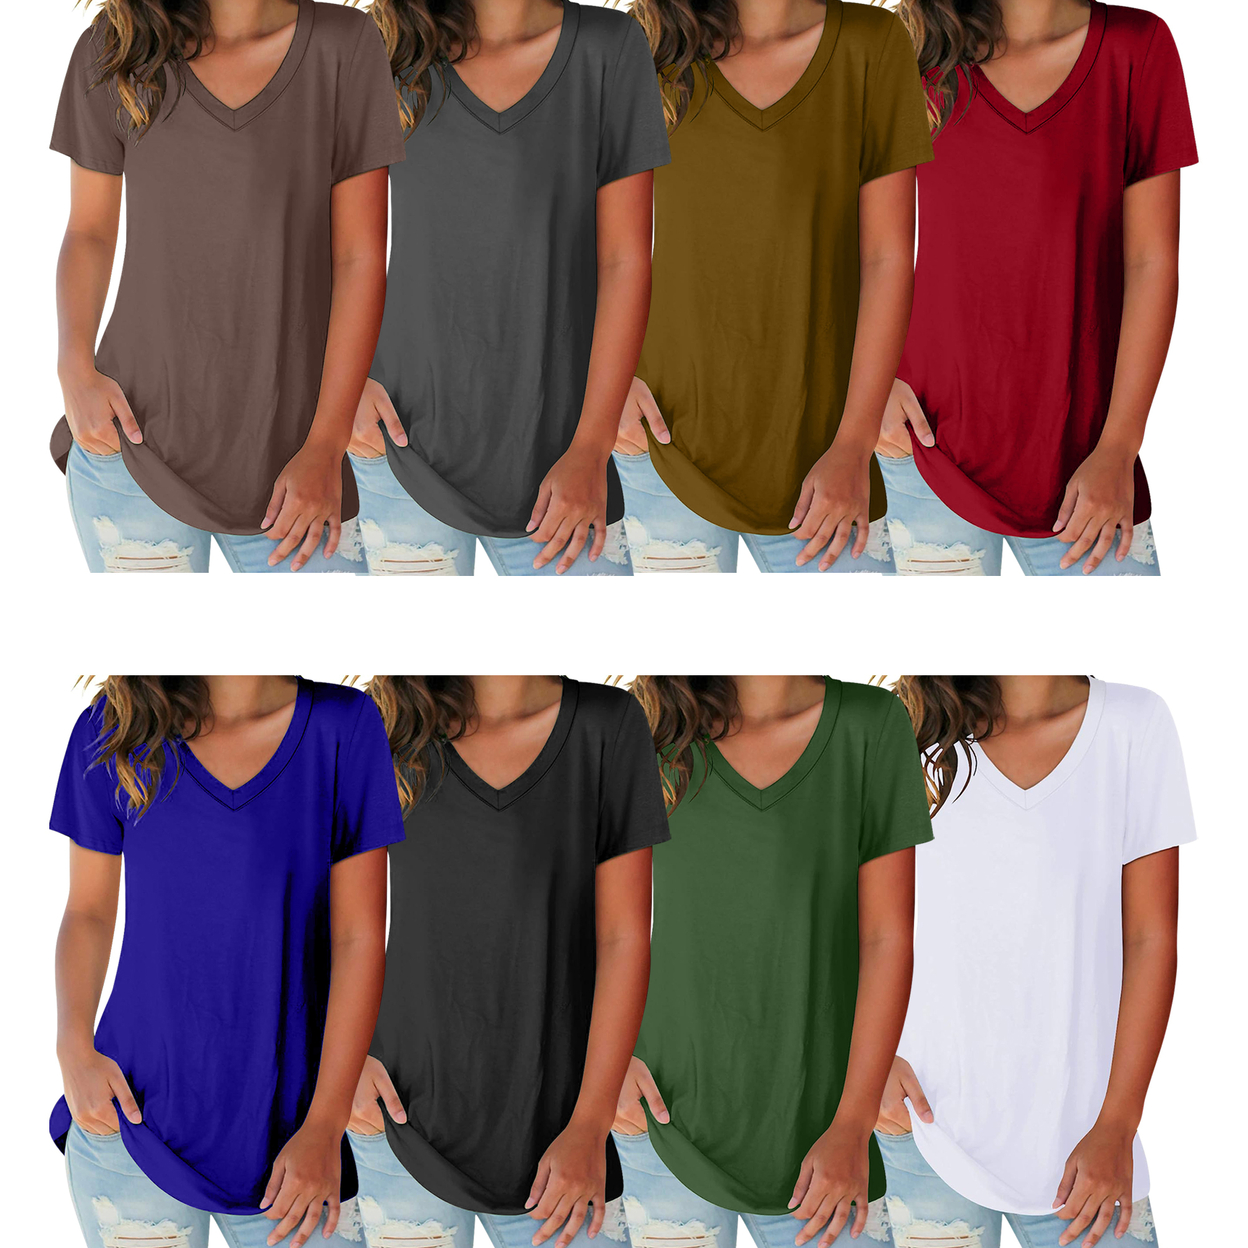 2-Pack: Women's Ultra Soft Smooth Cotton Blend Basic V-Neck Short Sleeve Shirts - White & Mustard, X-large